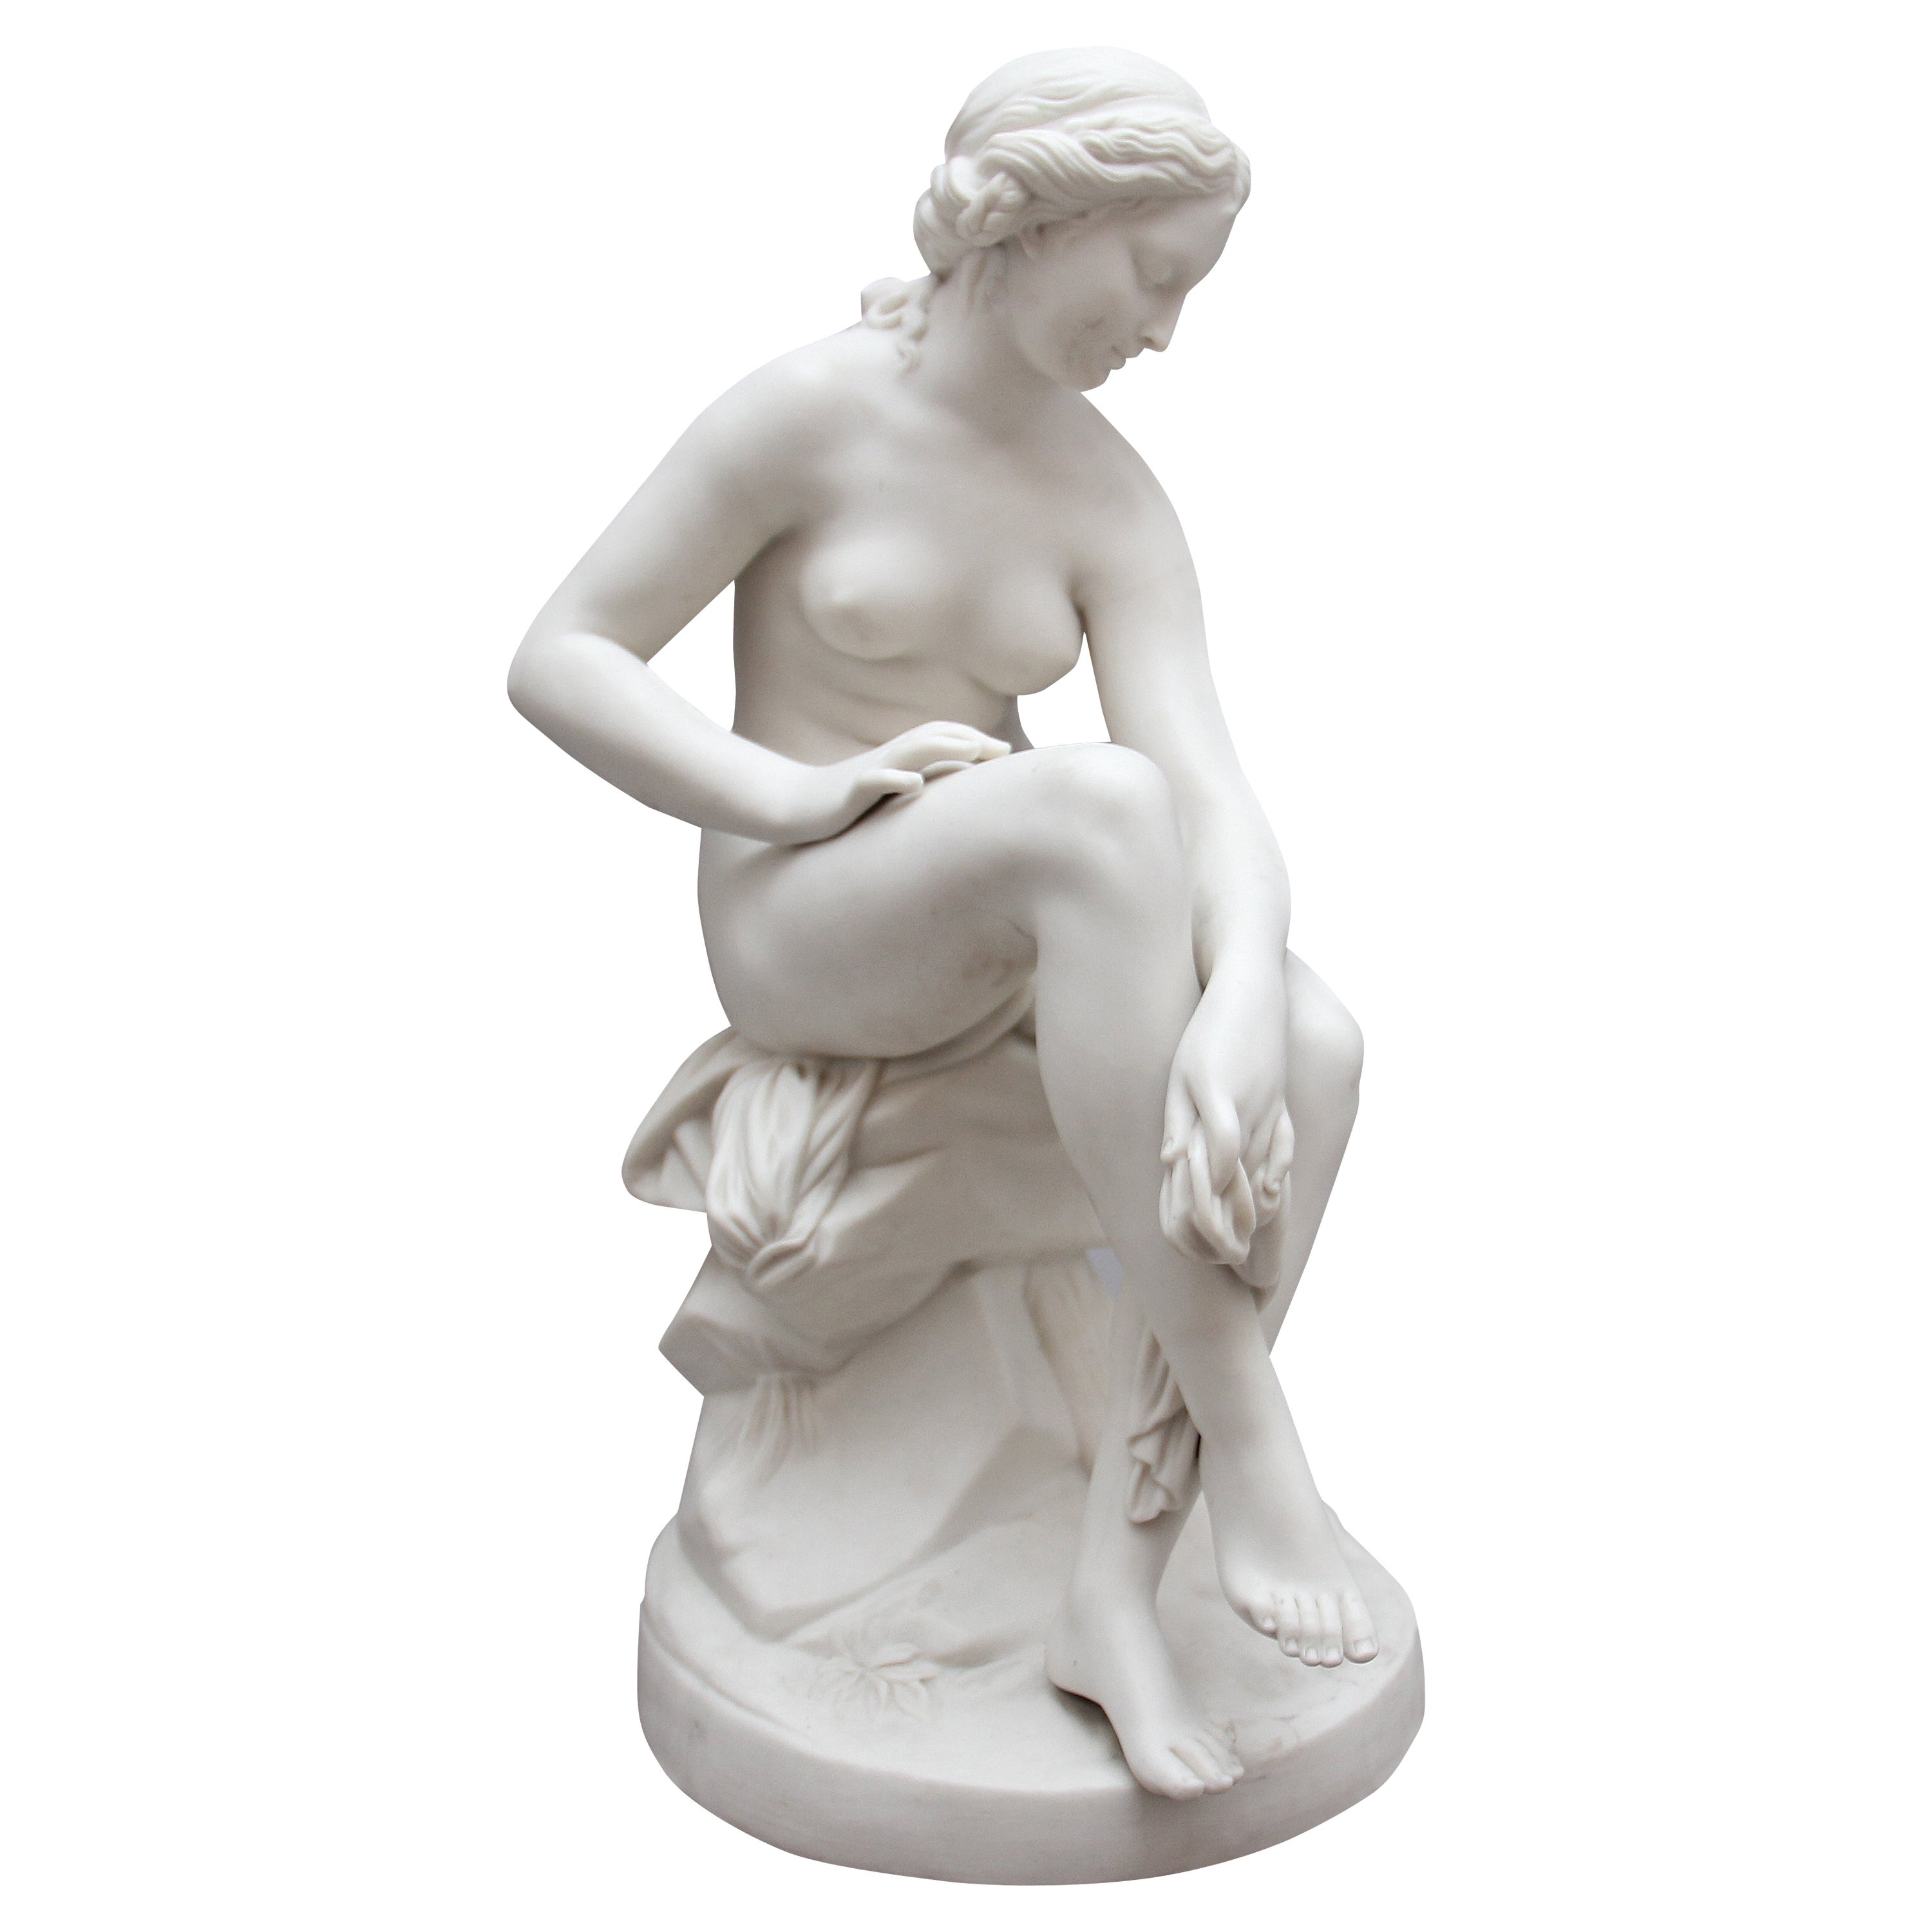 19th Century Parain Figure of a Female Nude